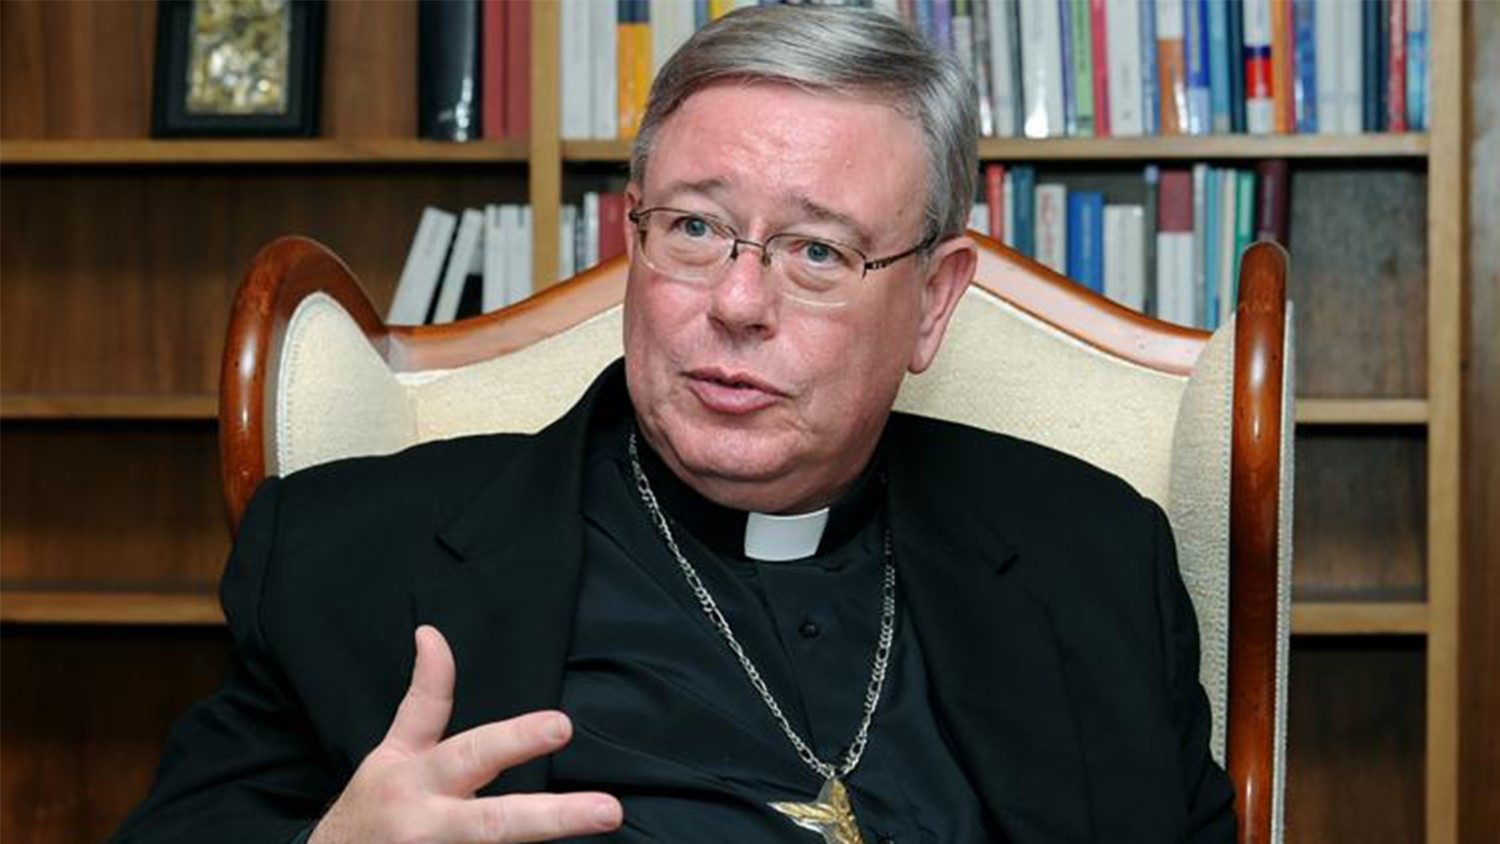 Cardinal Jean-Claude Hollerich calls